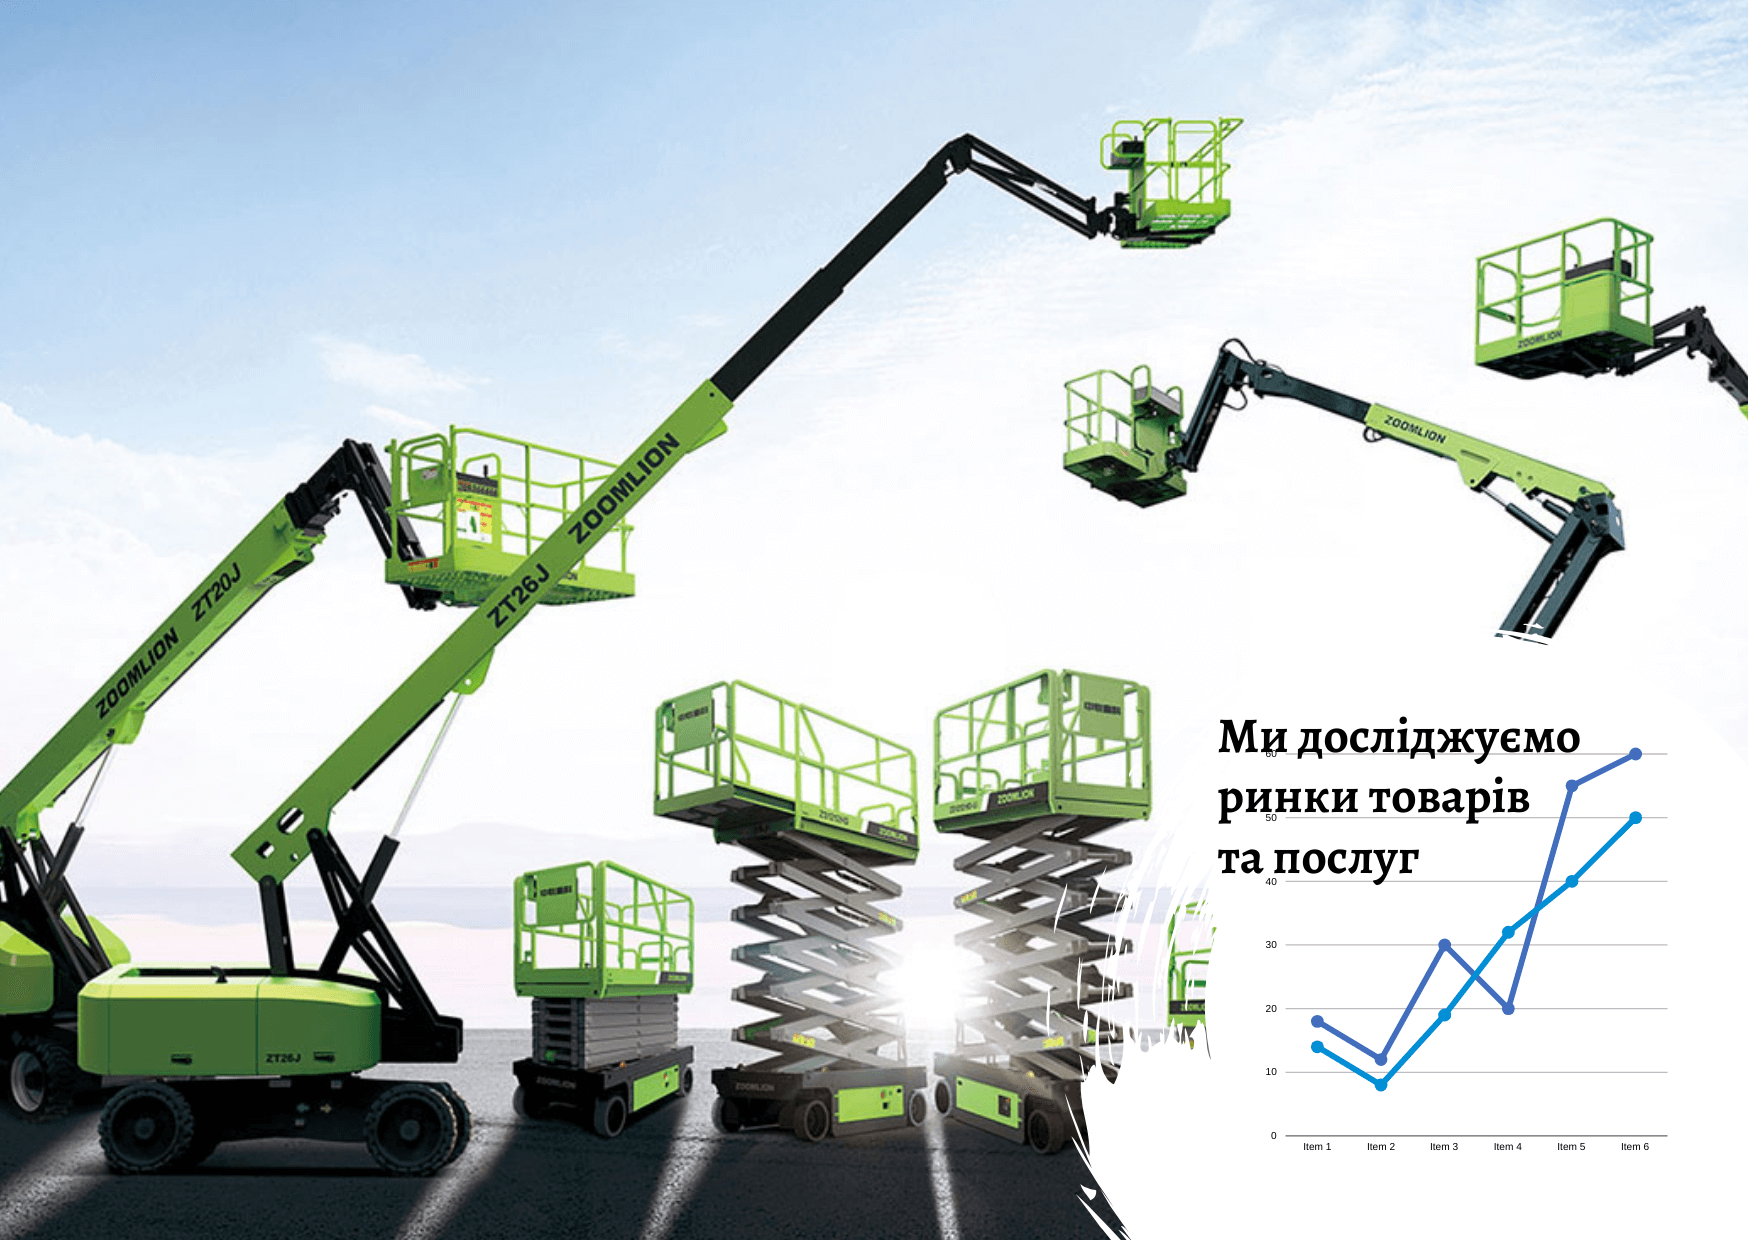 Ukrainian lifting equipment market: consumer preferences